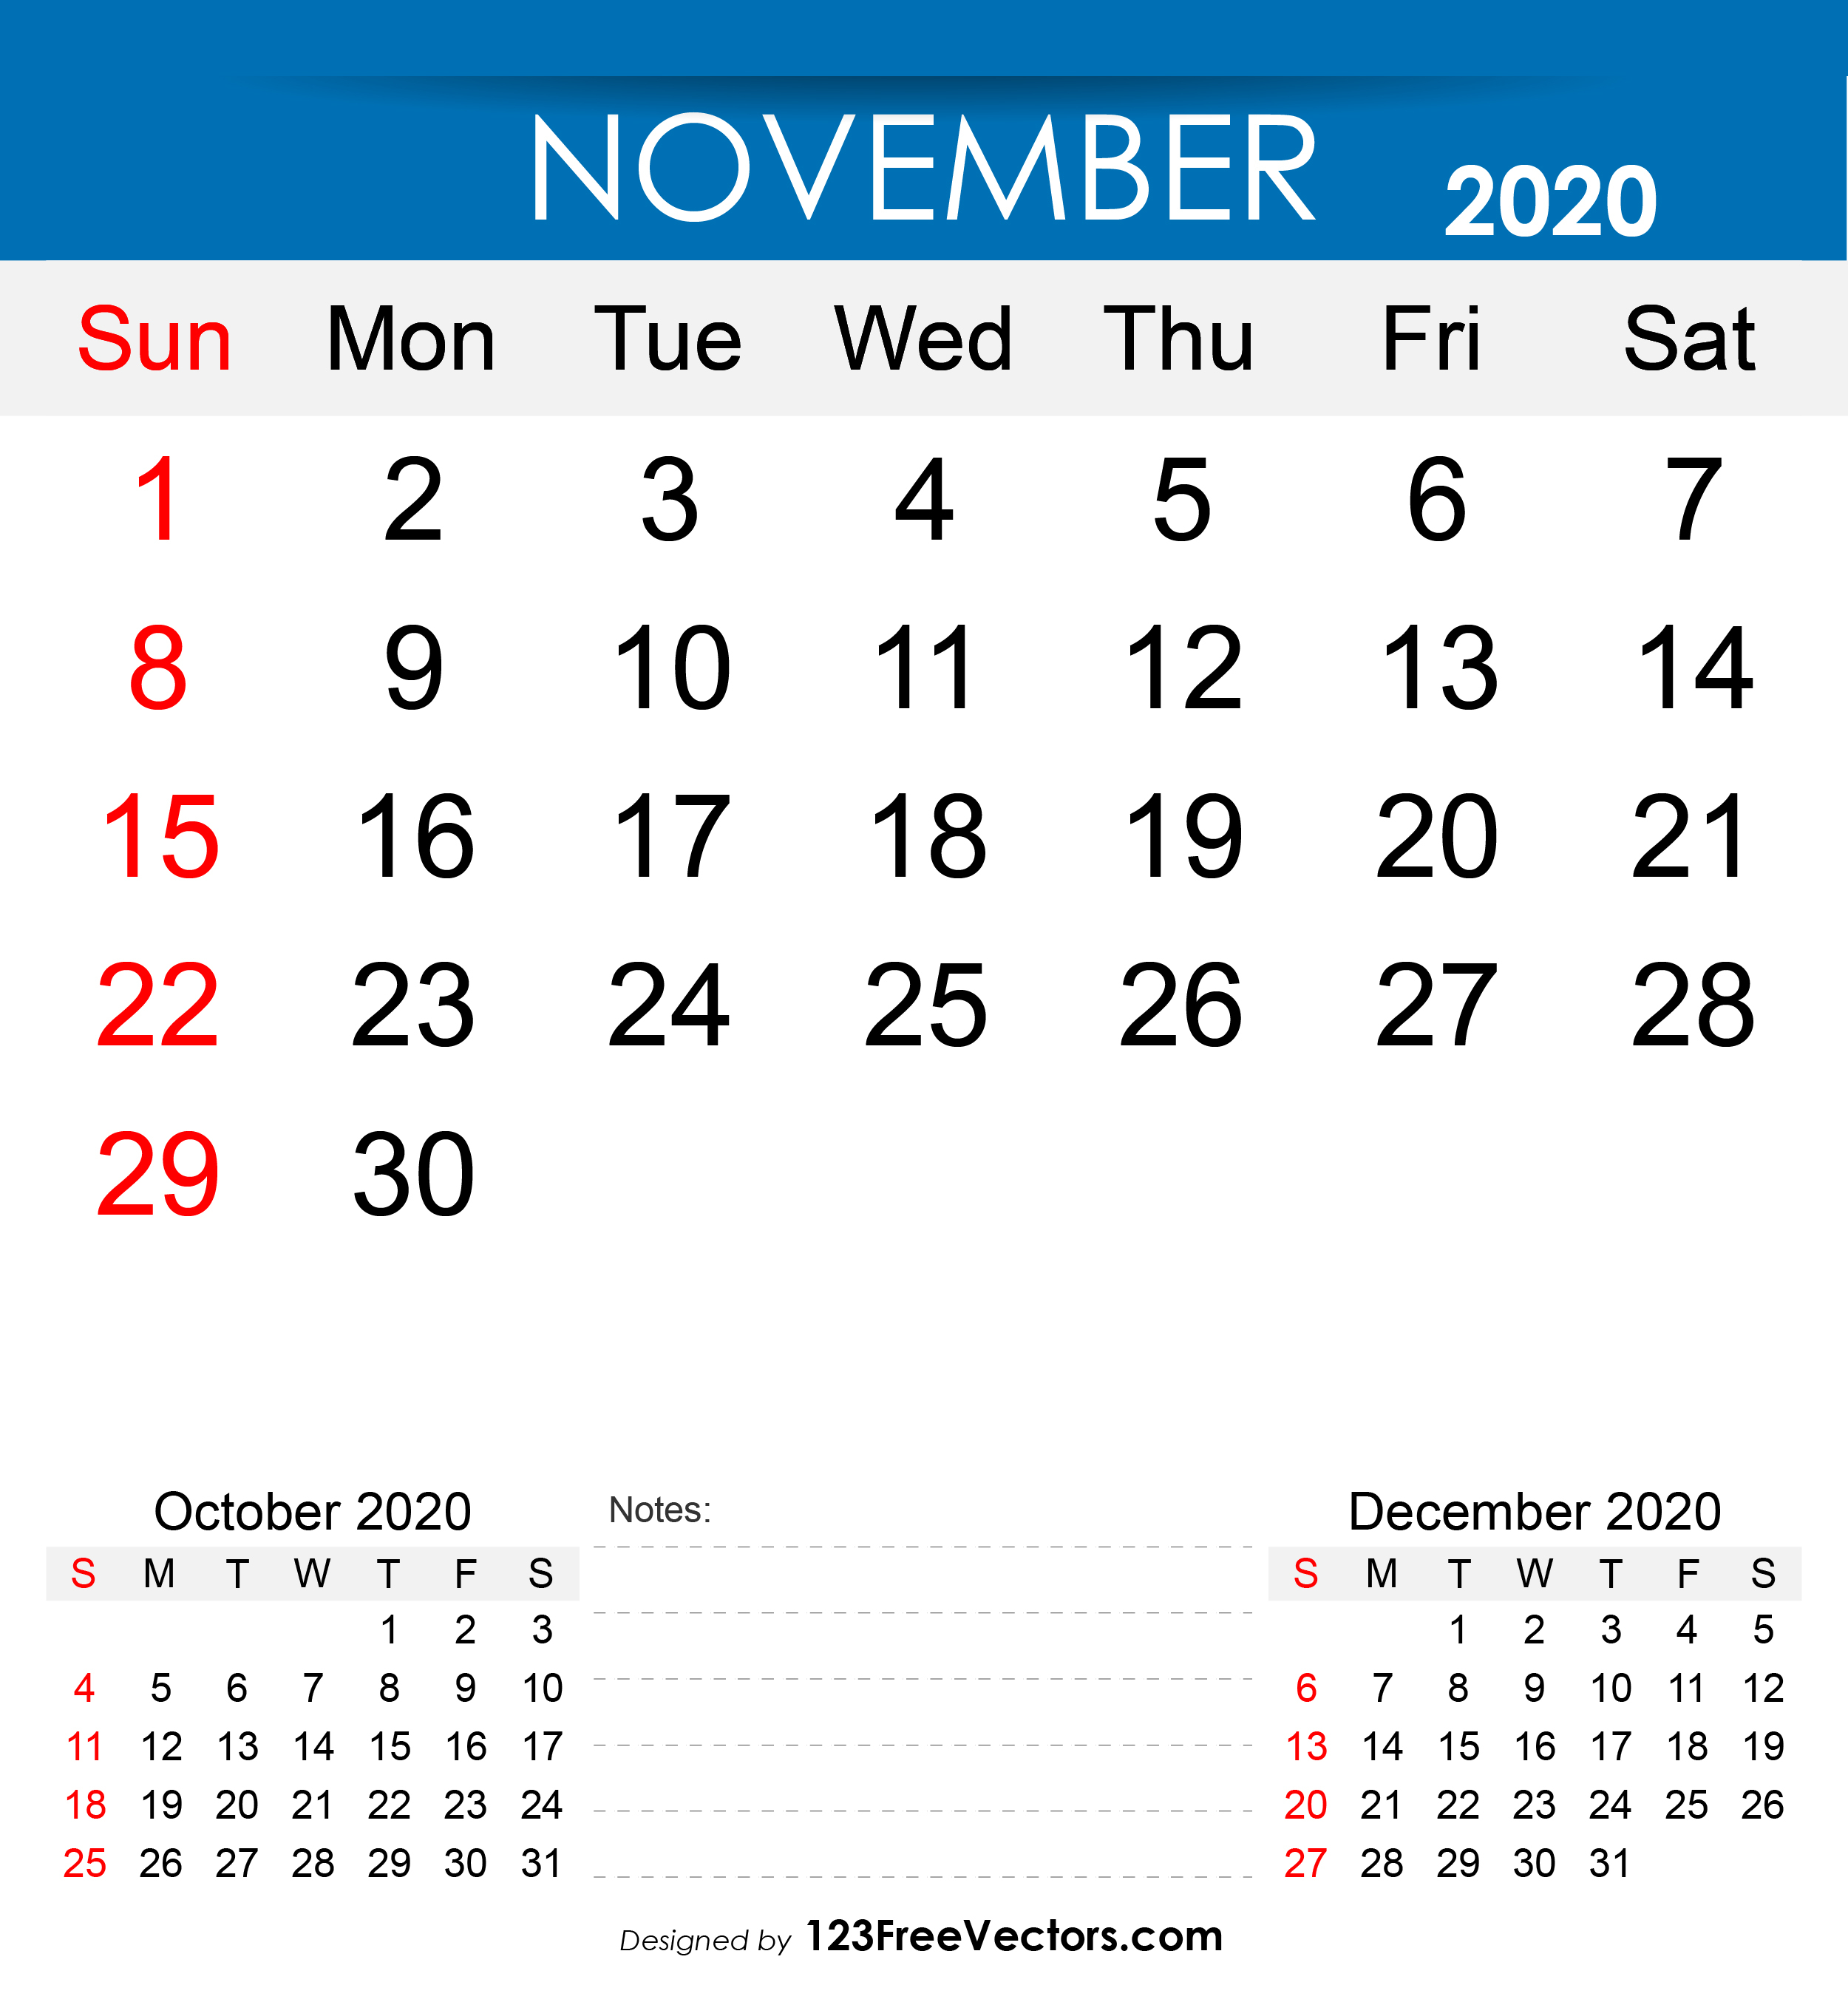 Novemberclipart | Free Vector Graphics | 123Freevectors in November 2020 Clipart